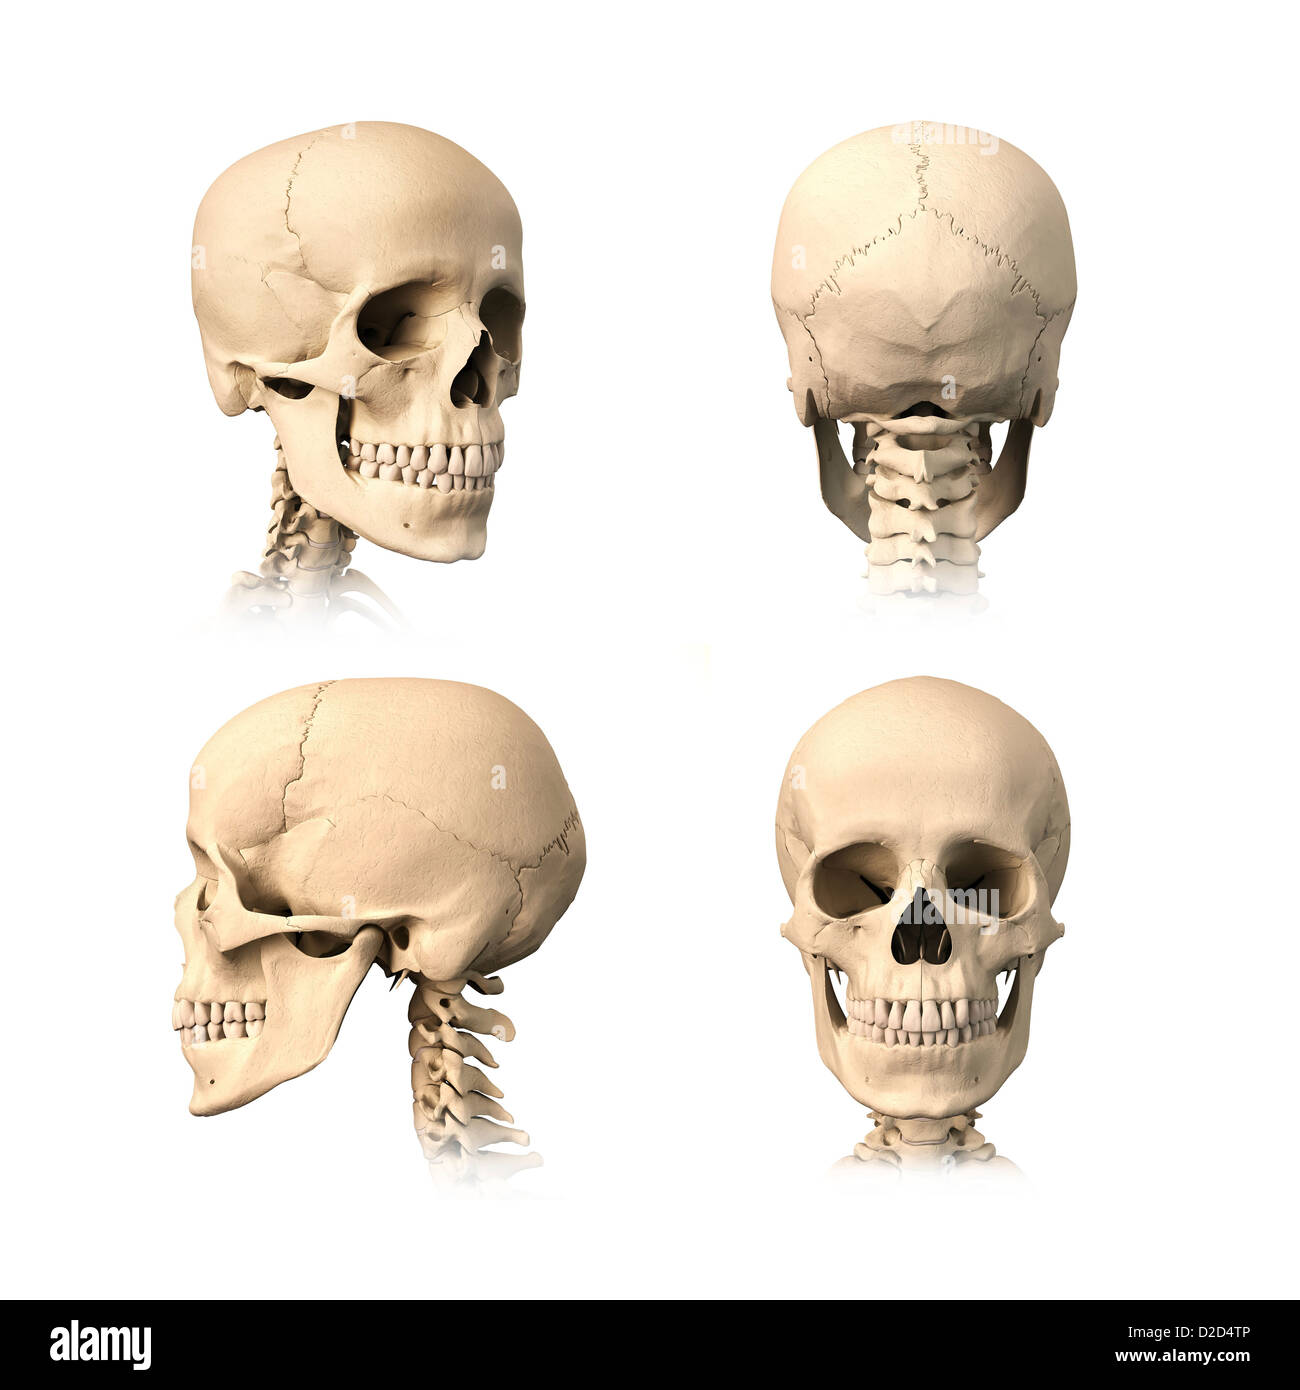 Human skull computer artwork Stock Photo